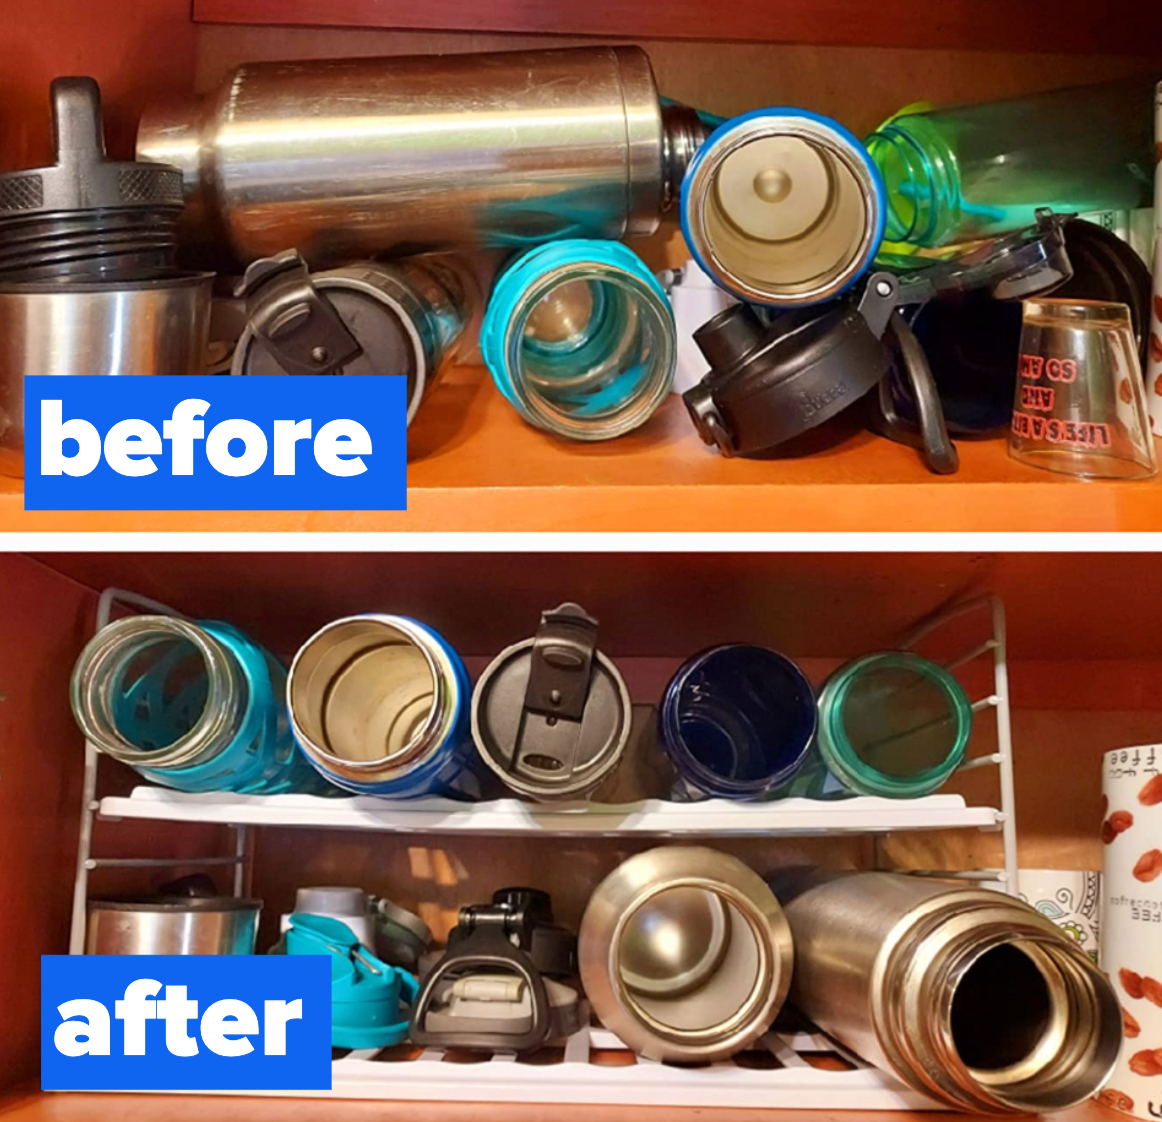 Stainless Steel Anti-Drill Sink Organizer Rack - Inspire Uplift